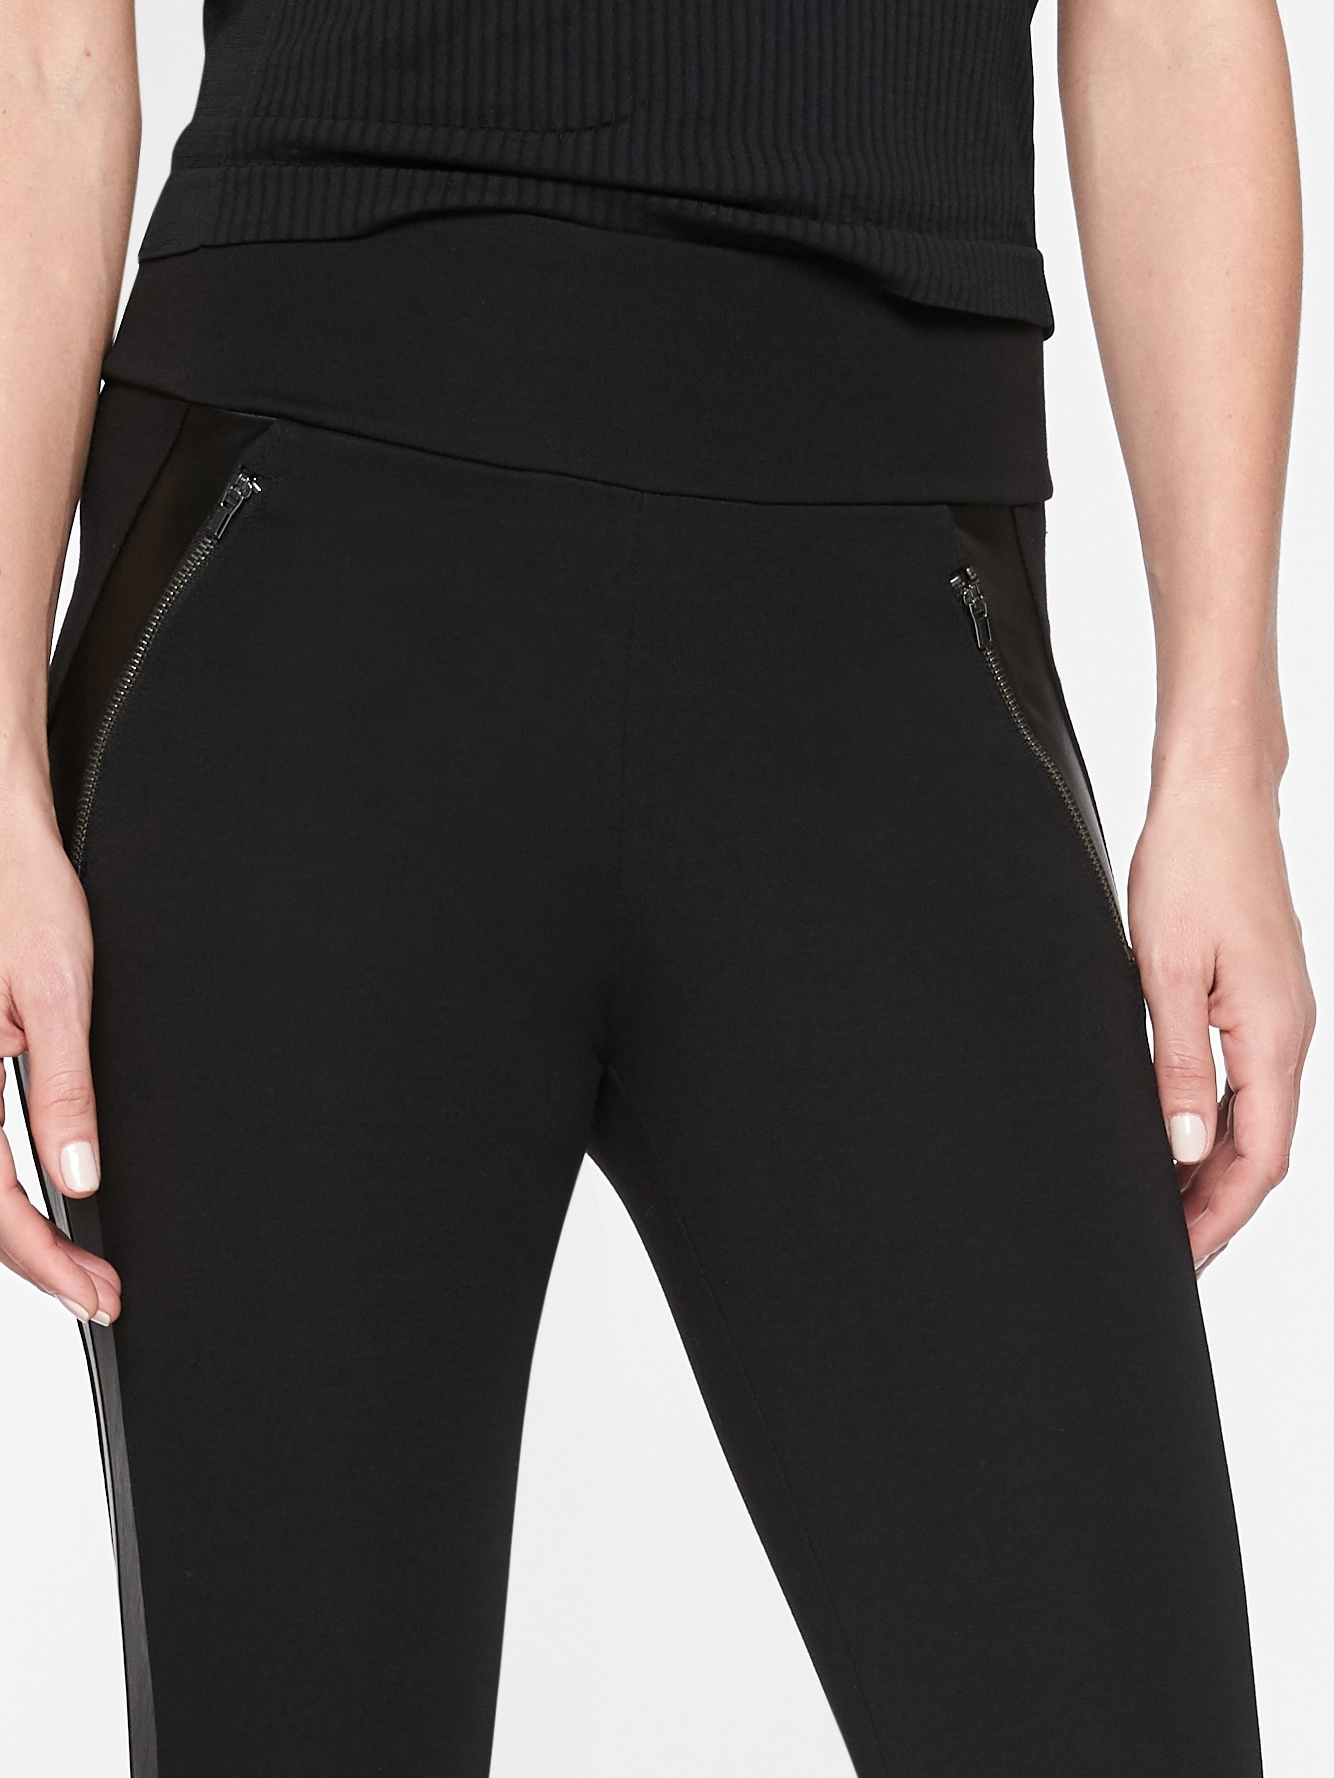 Athleta Black Leather Pants for Women